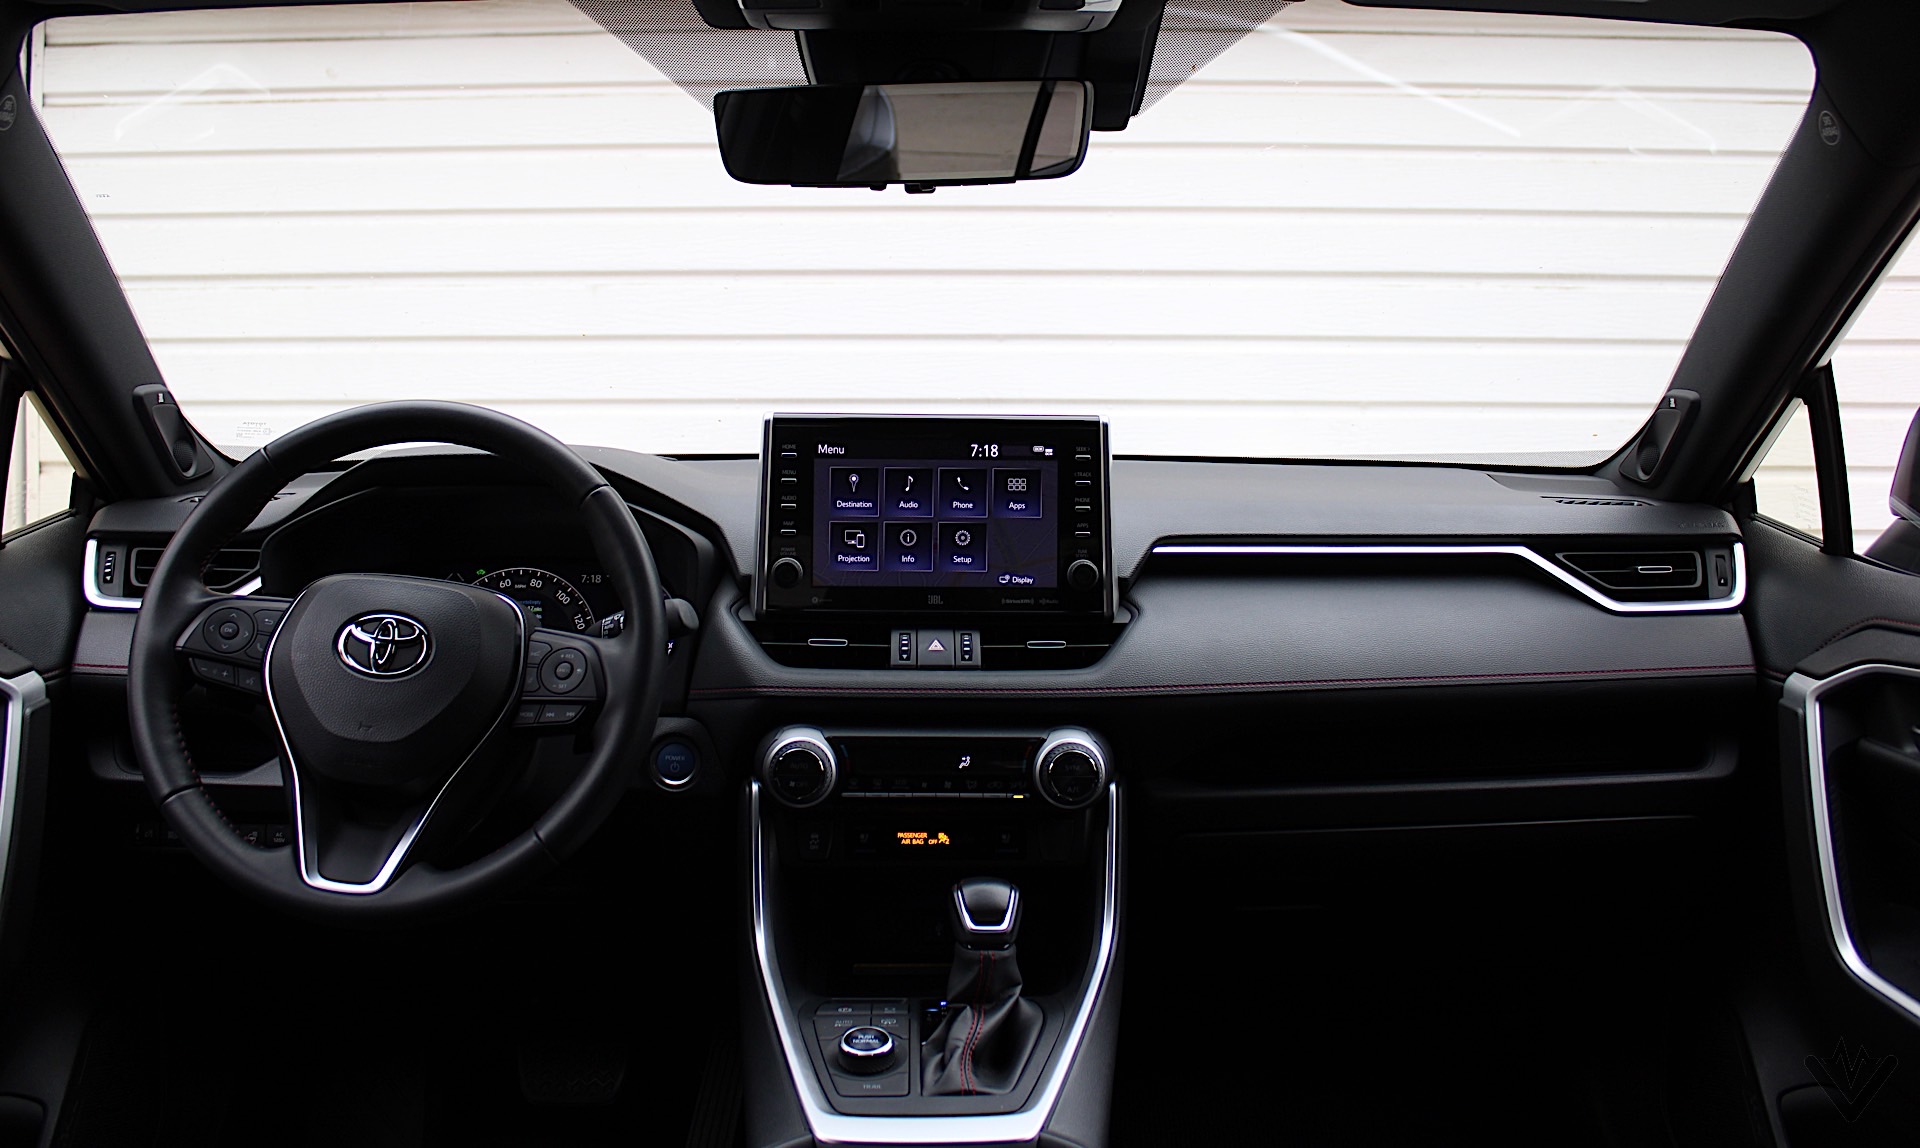 2021 Toyota RAV4 Prime interior 01 1